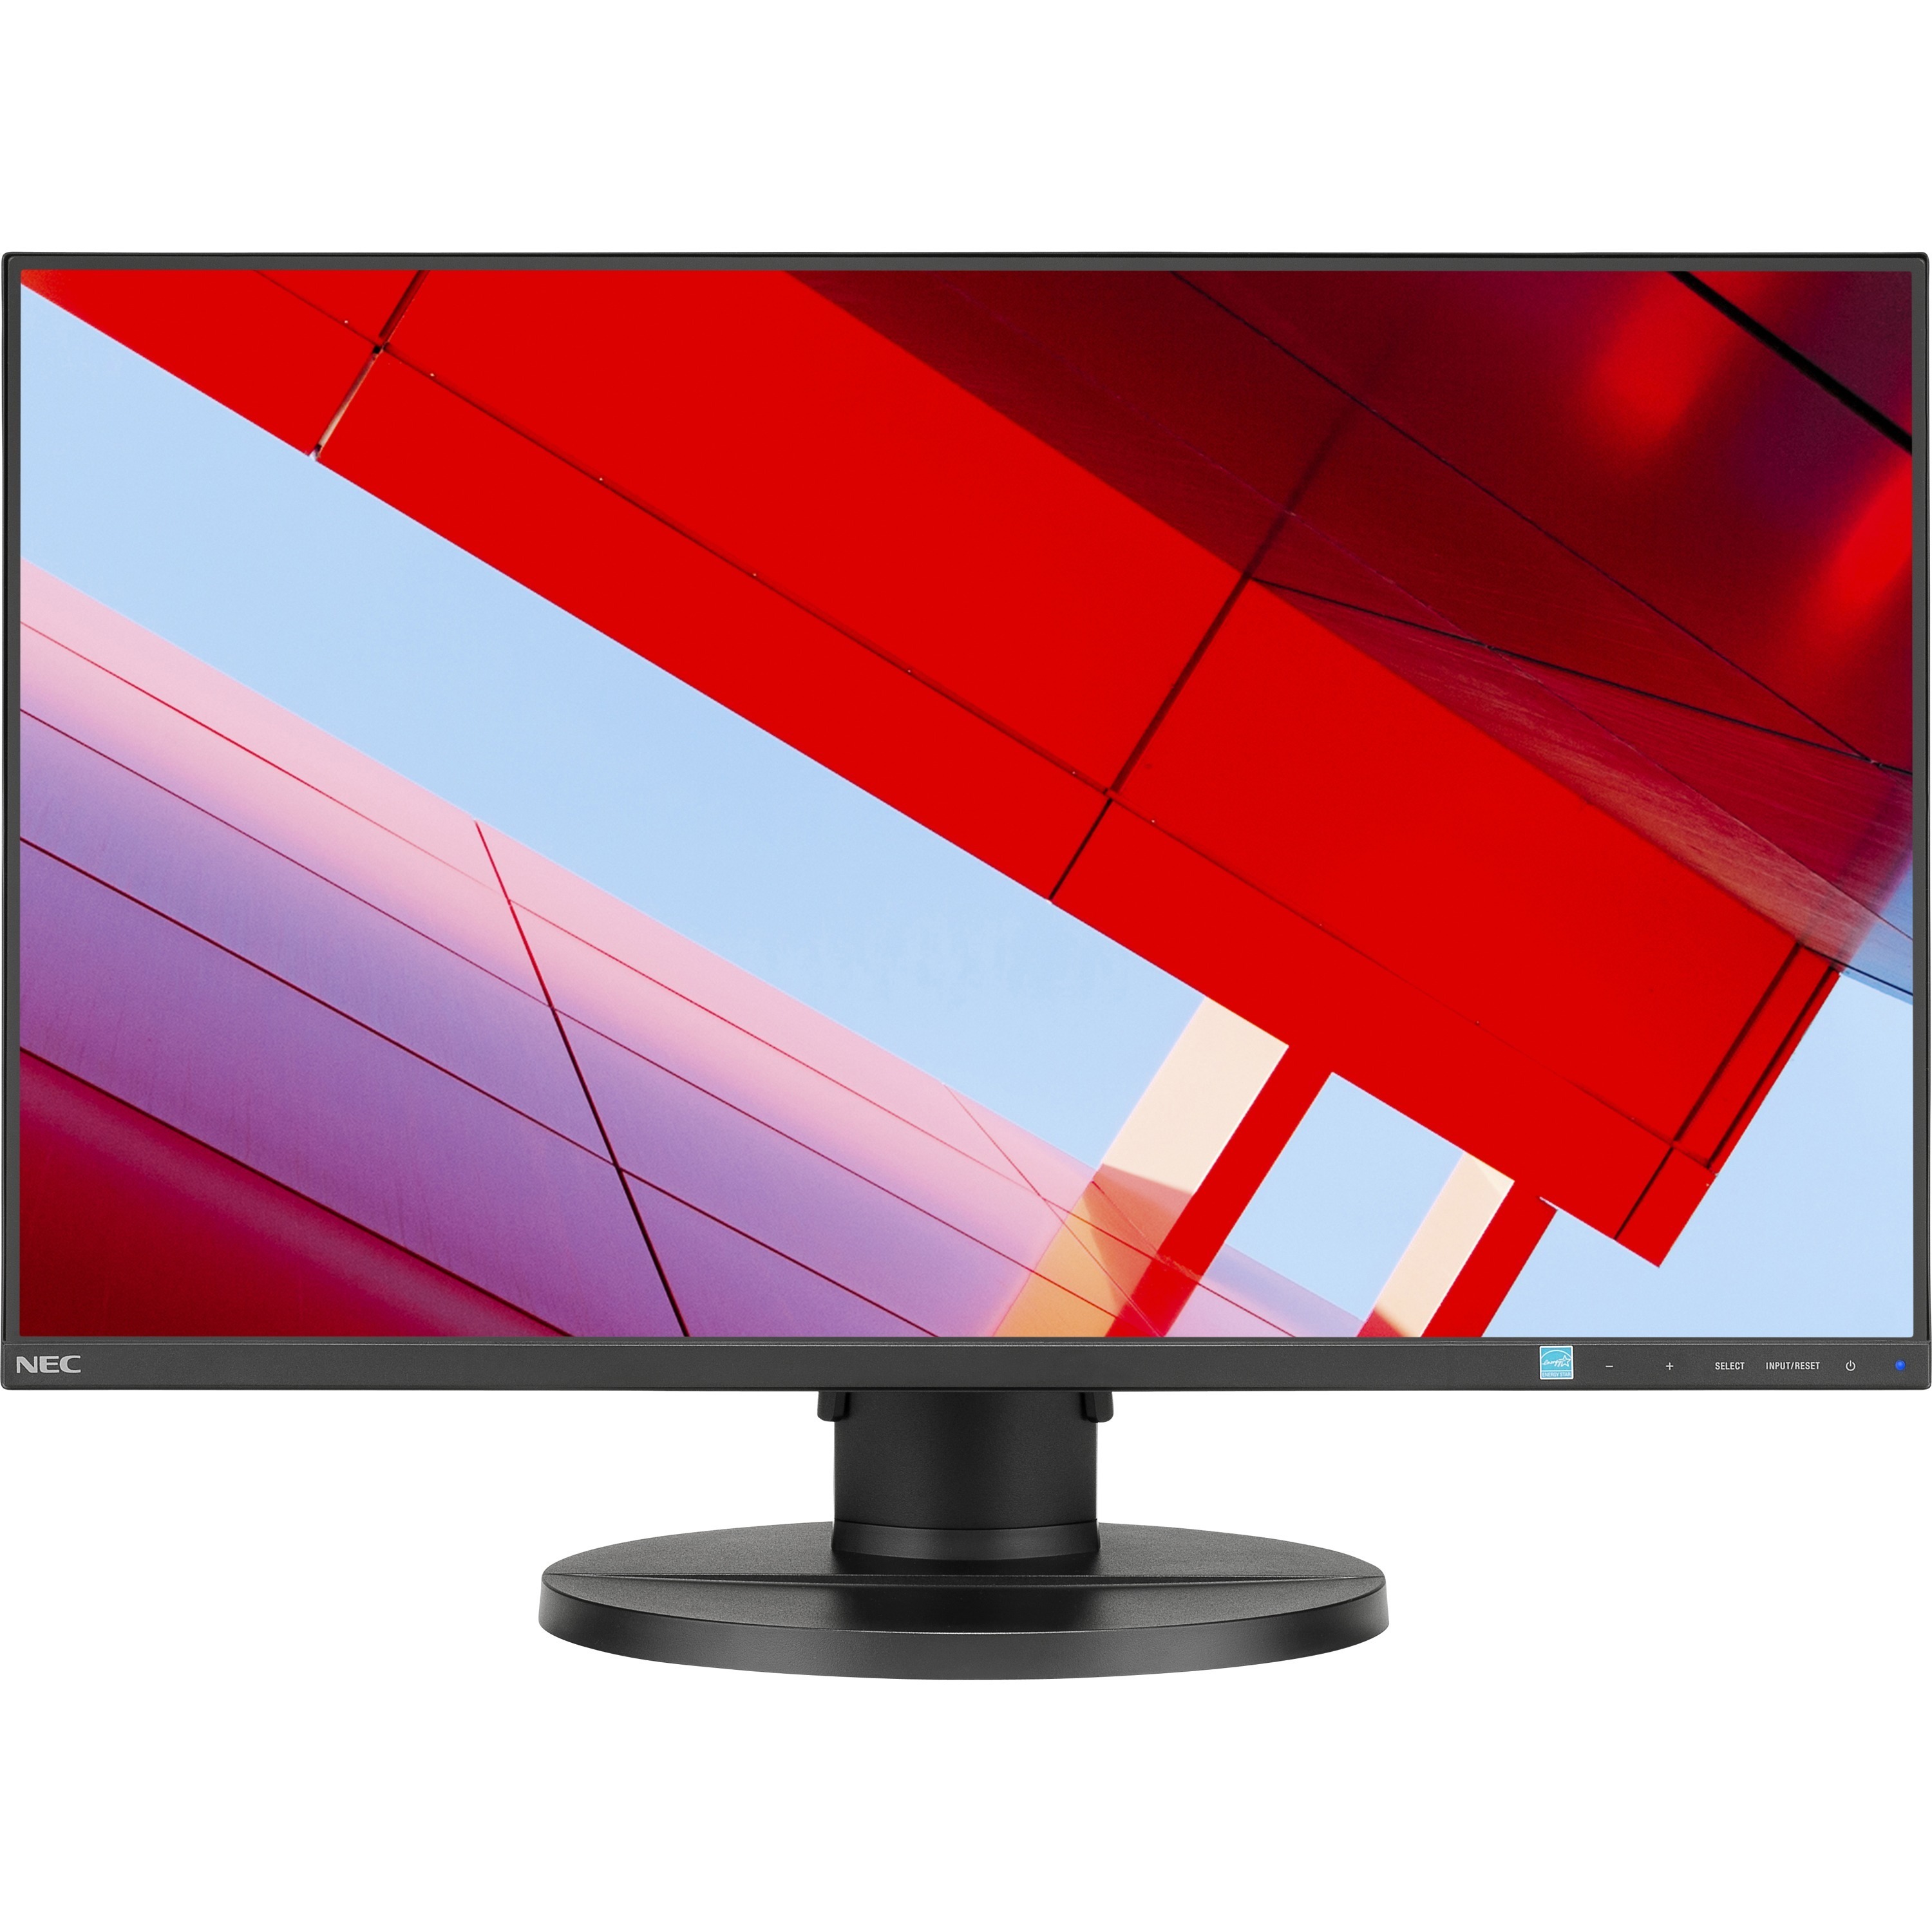 NEC Display MultiSync E271N-BK 27" Full HD WLED LCD Monitor - 16:9 - Black_subImage_1